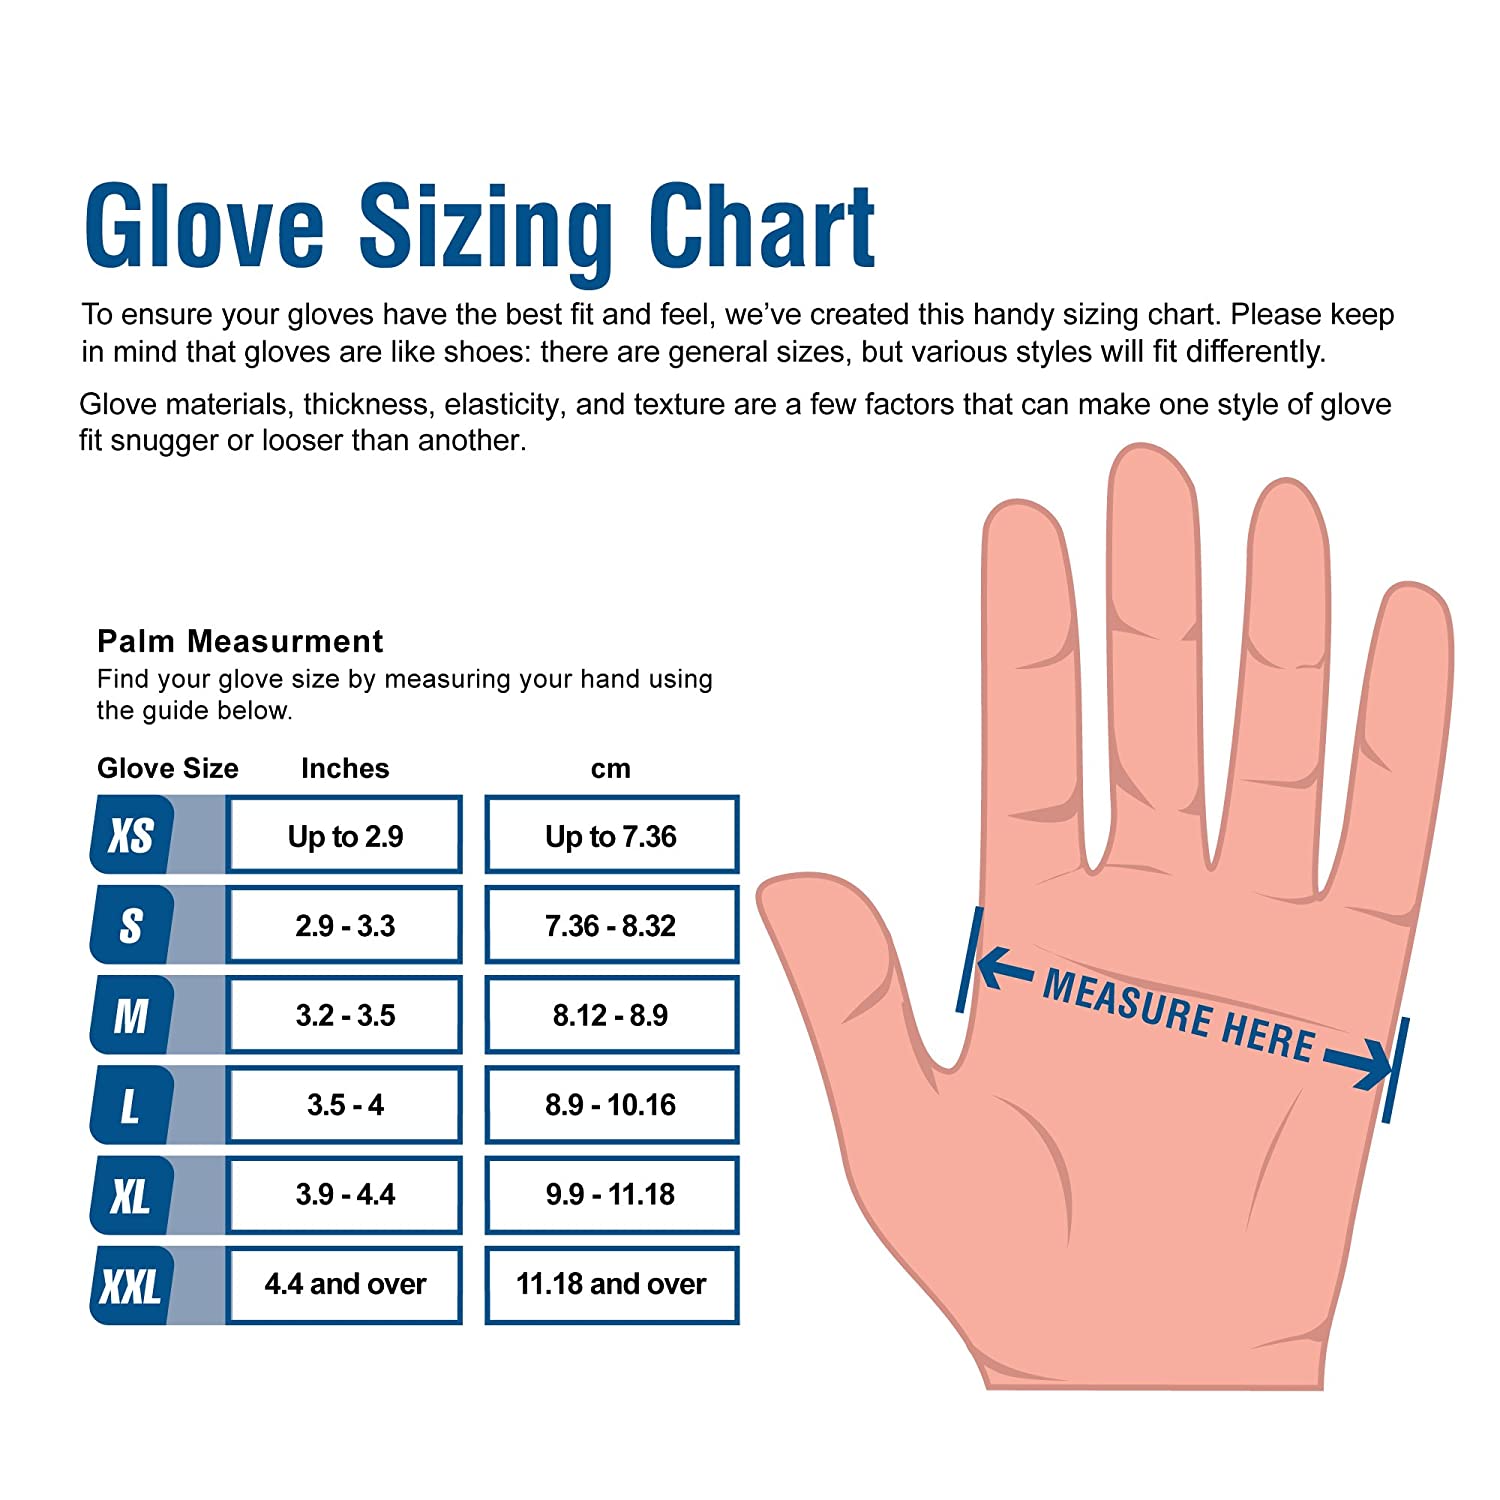 Gloveworks 5 Mil Blue Nitrile Industrial Powder Free Large Disposable Gloves (100-Box)